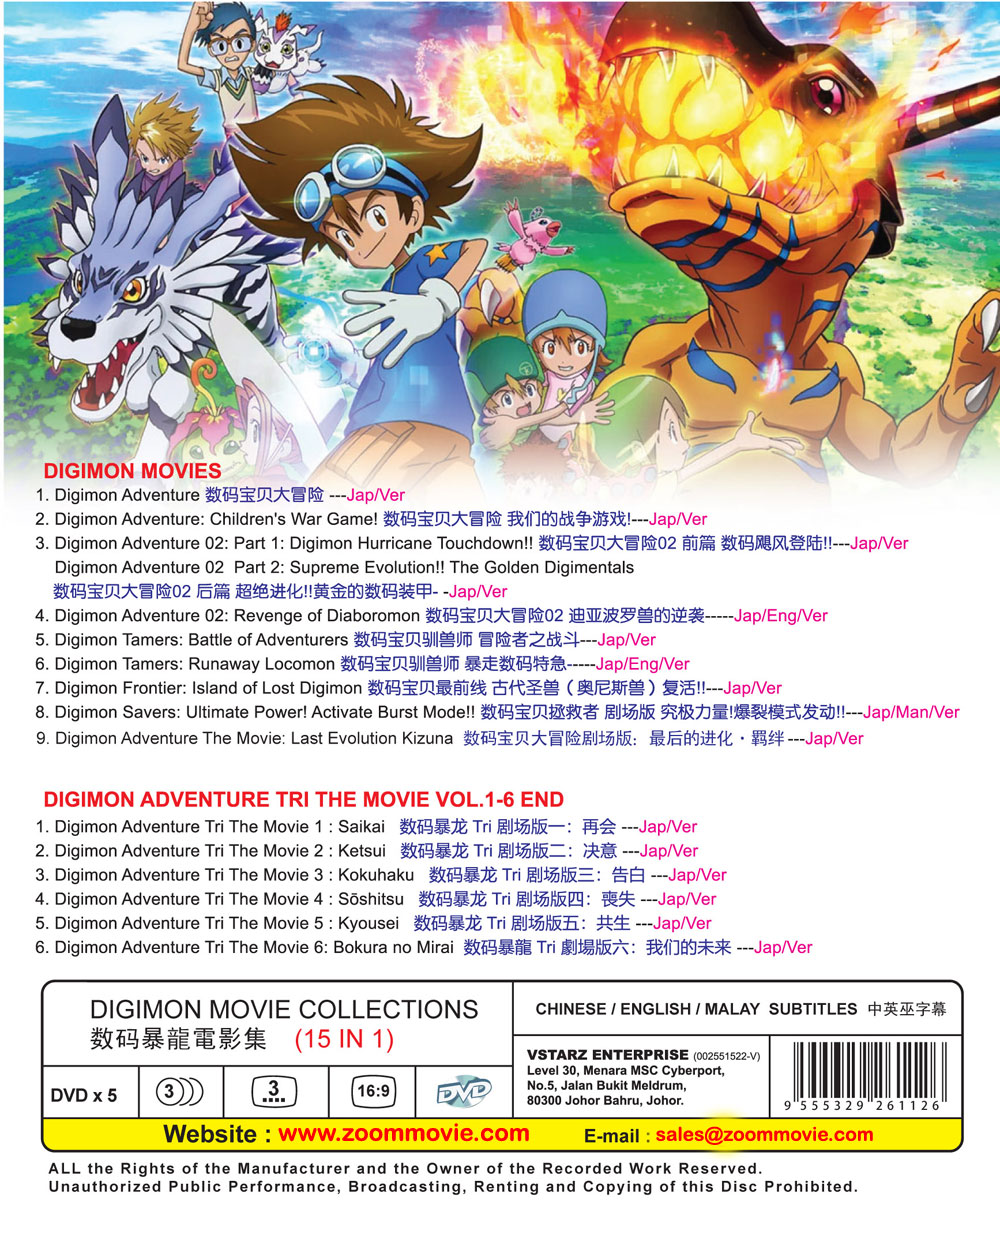 DVD DIGIMON ADVENTURE TRI THE MOVIE 1 : SAIKAI English SUB All Region  Tracking